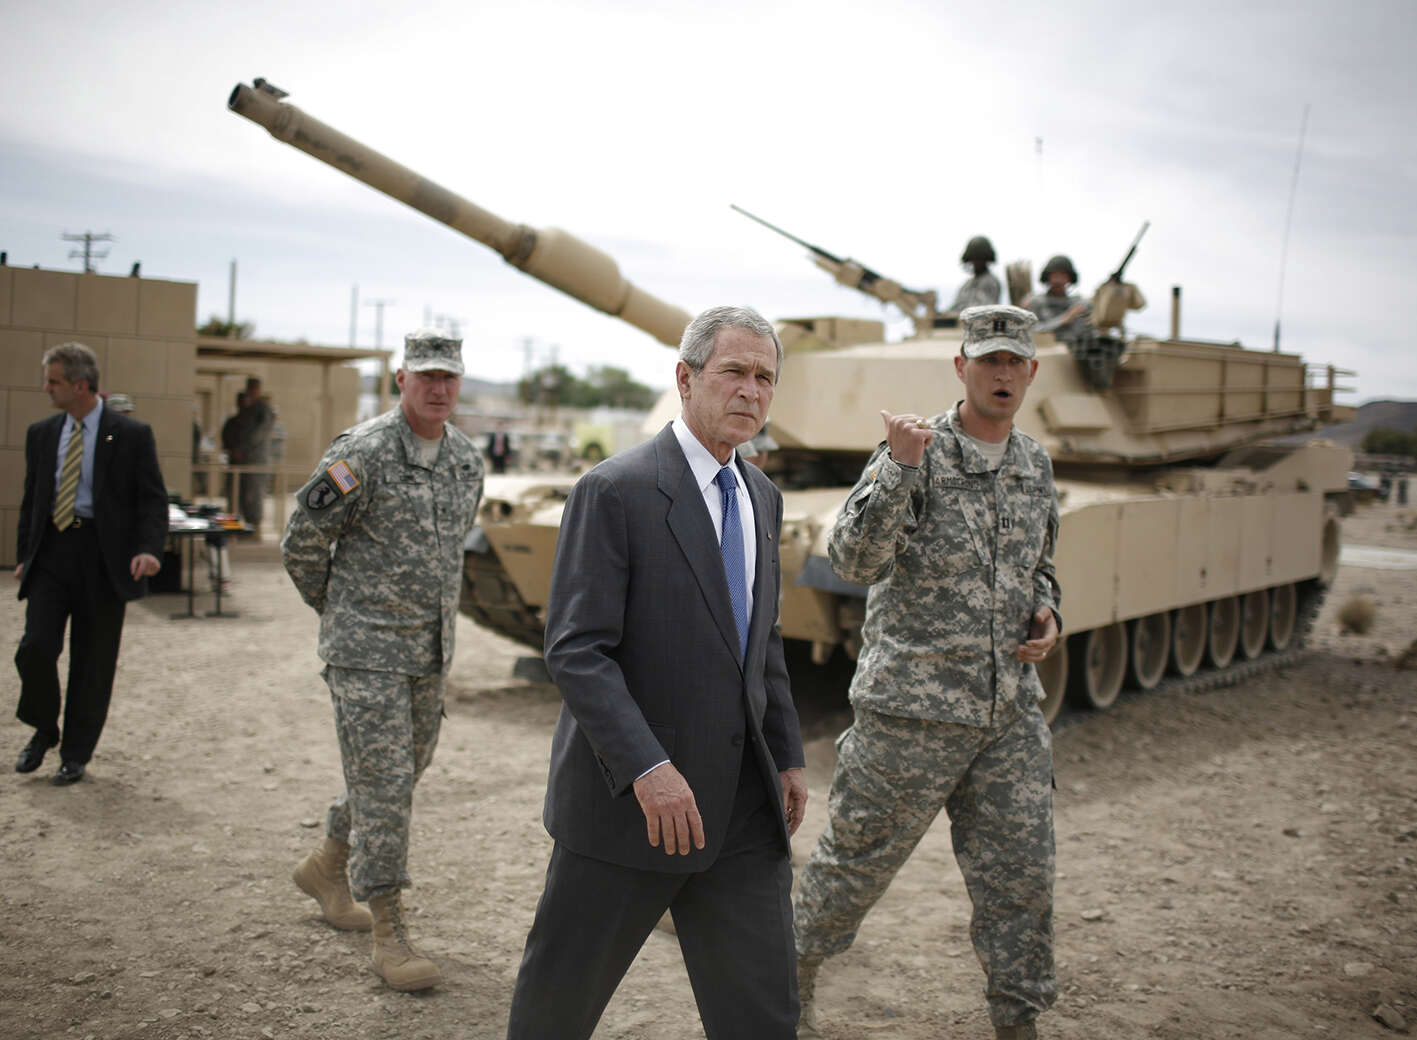 George Bush’s Iraq War gaffe is unintentionally revealing